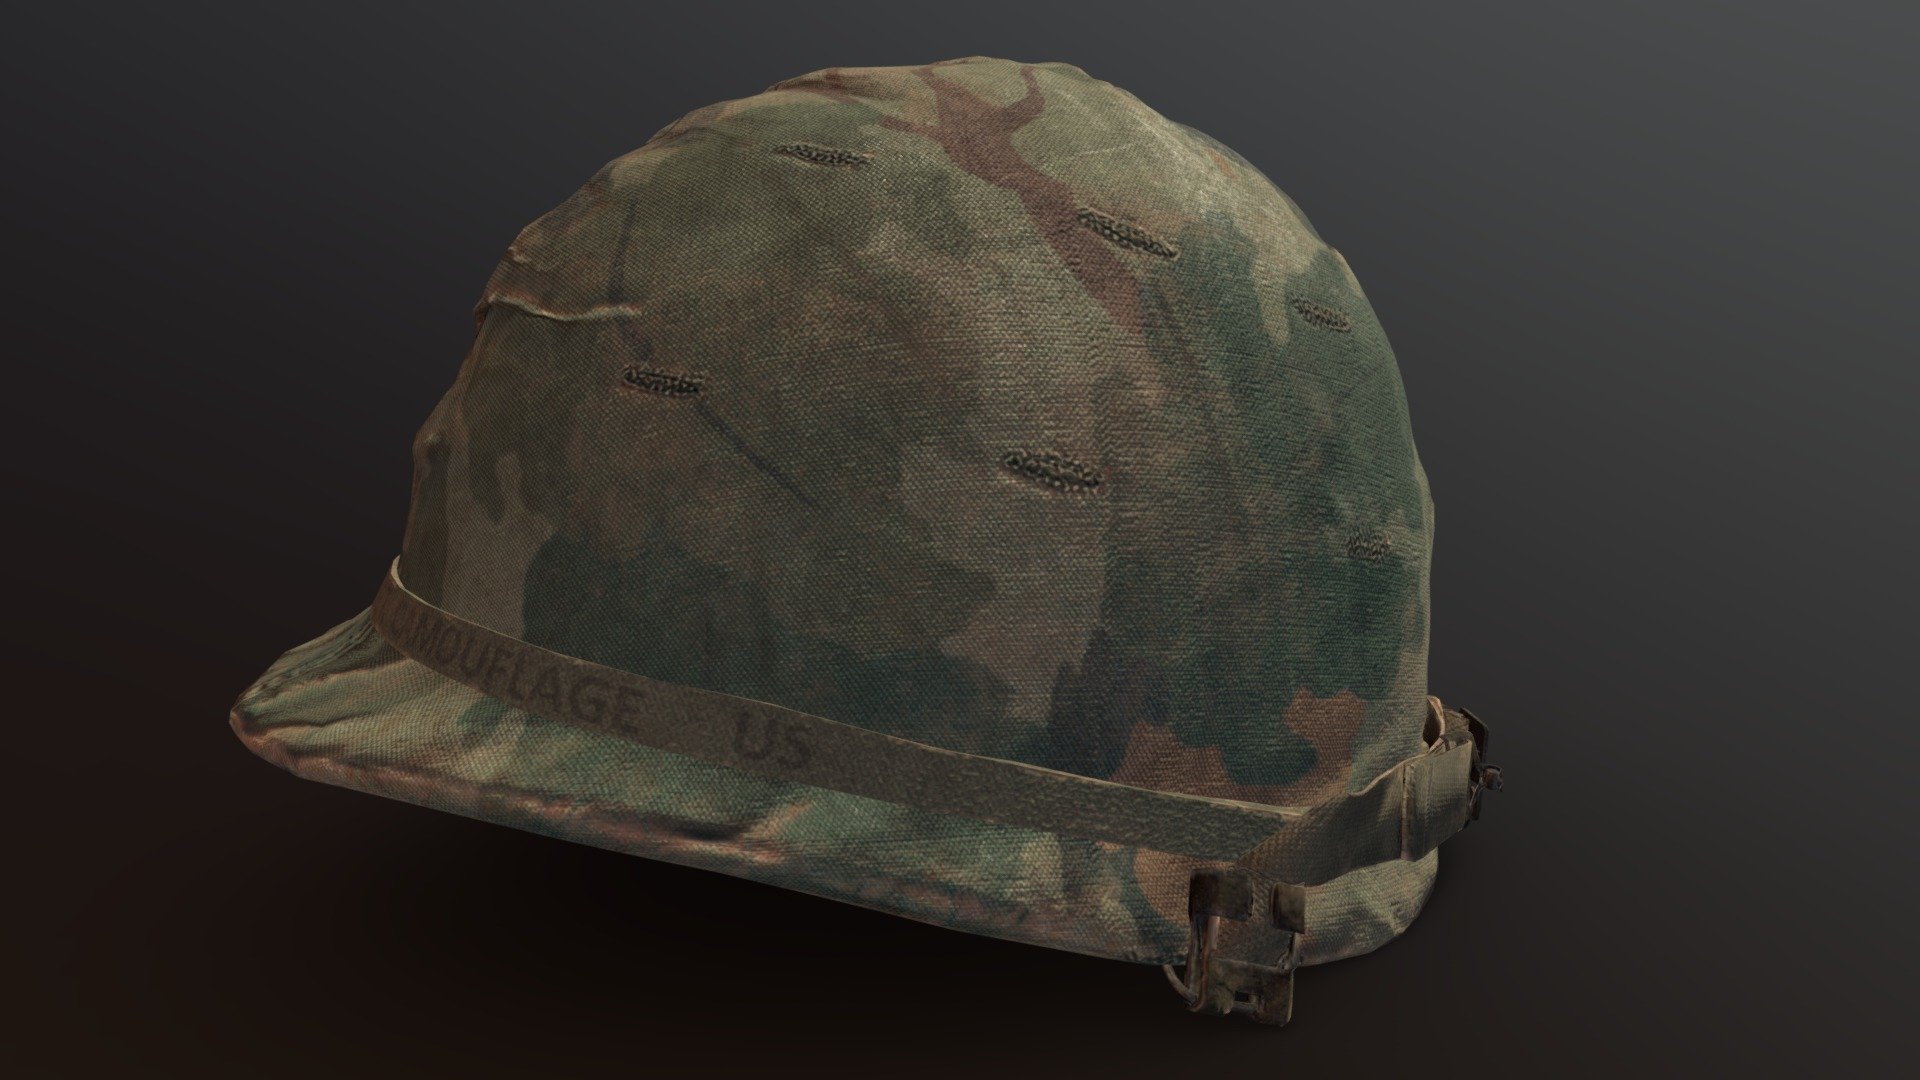 Vietnam-era Standard Issue US M1 Helmet, covered with &ldquo;Mitchell